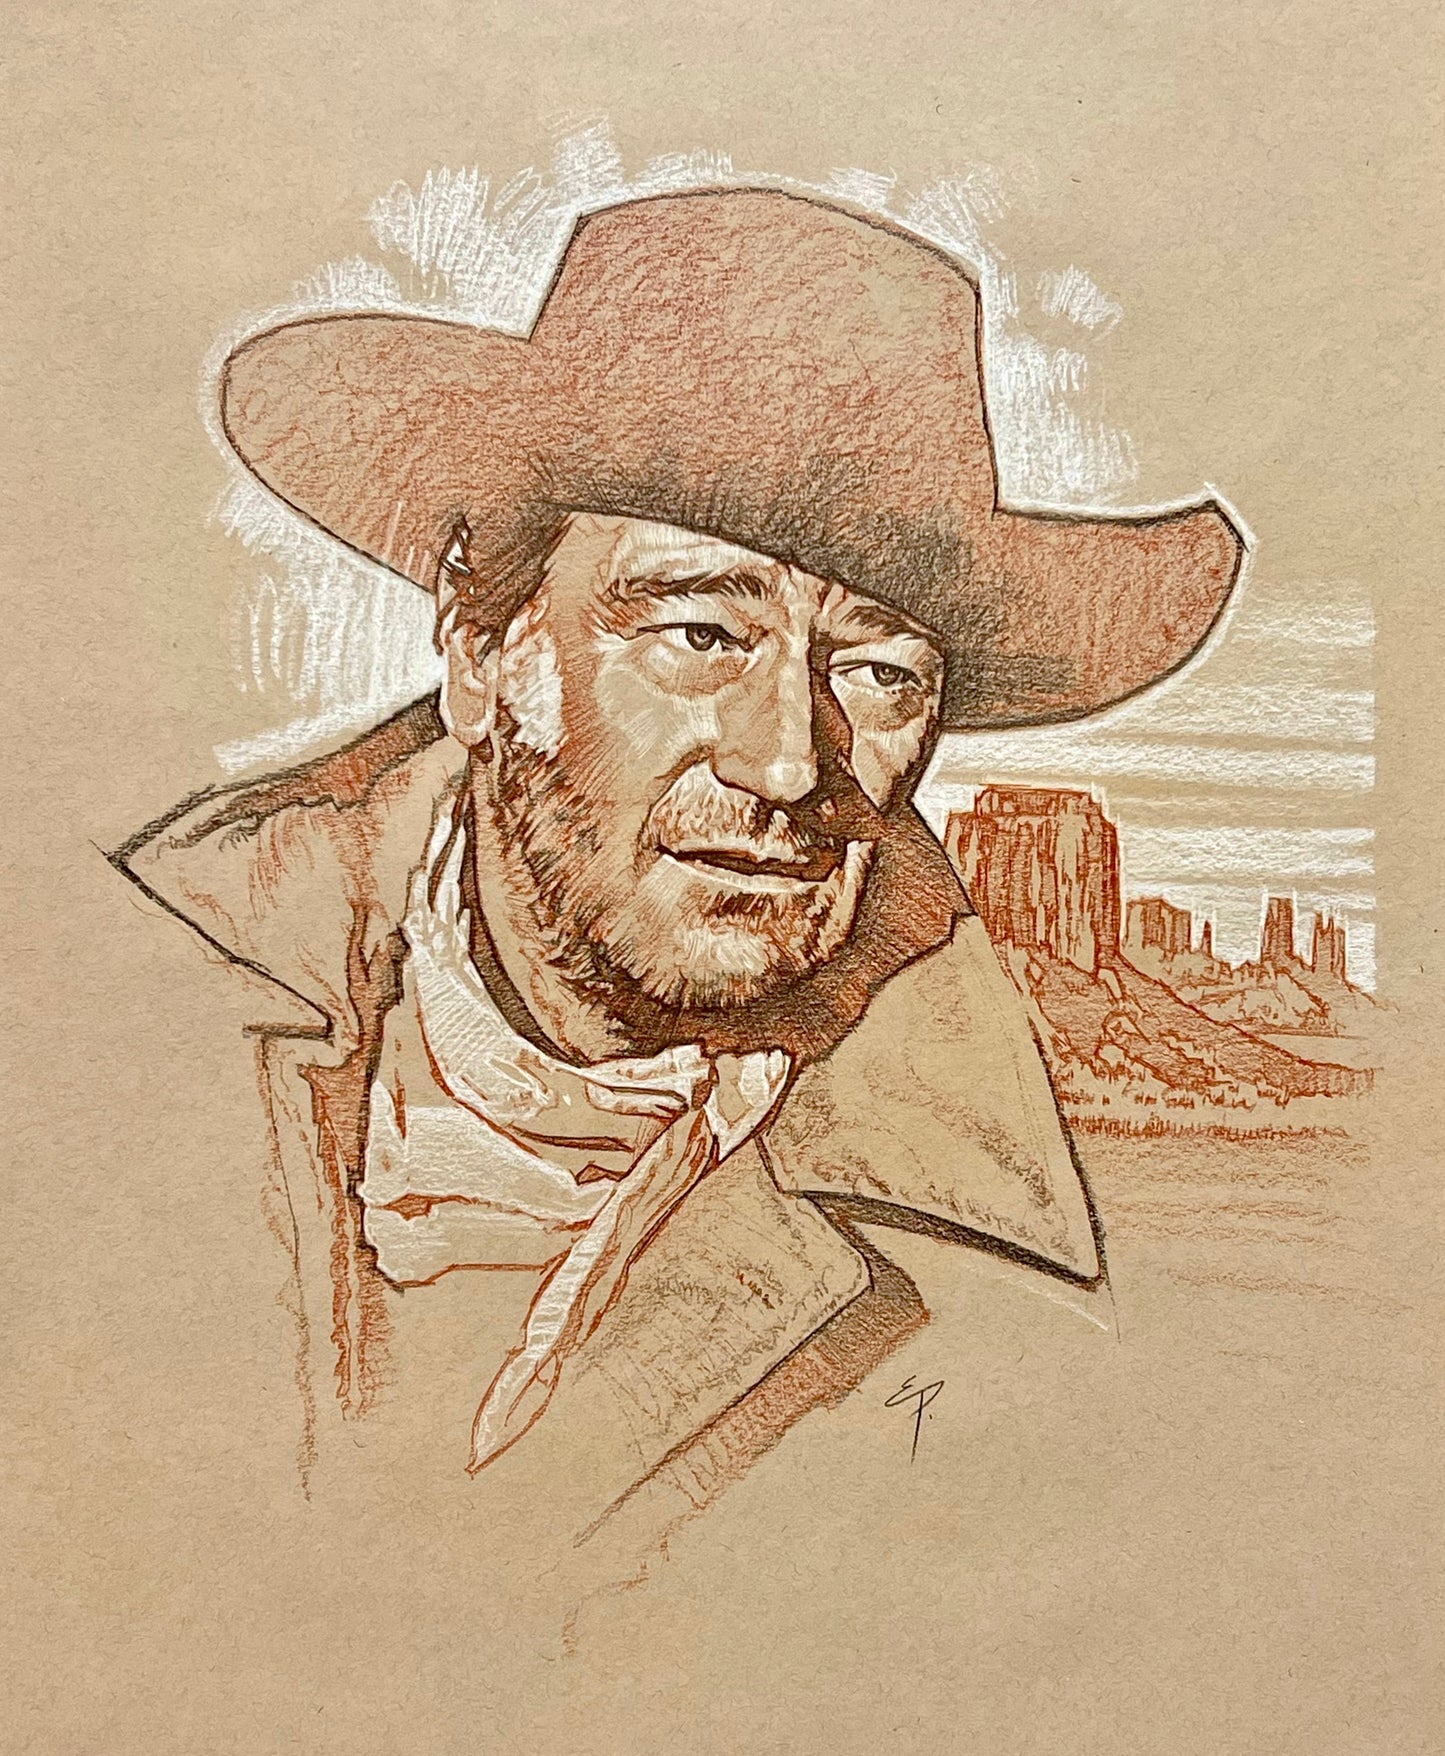 "The Searchers" John Wayne Original Sketch